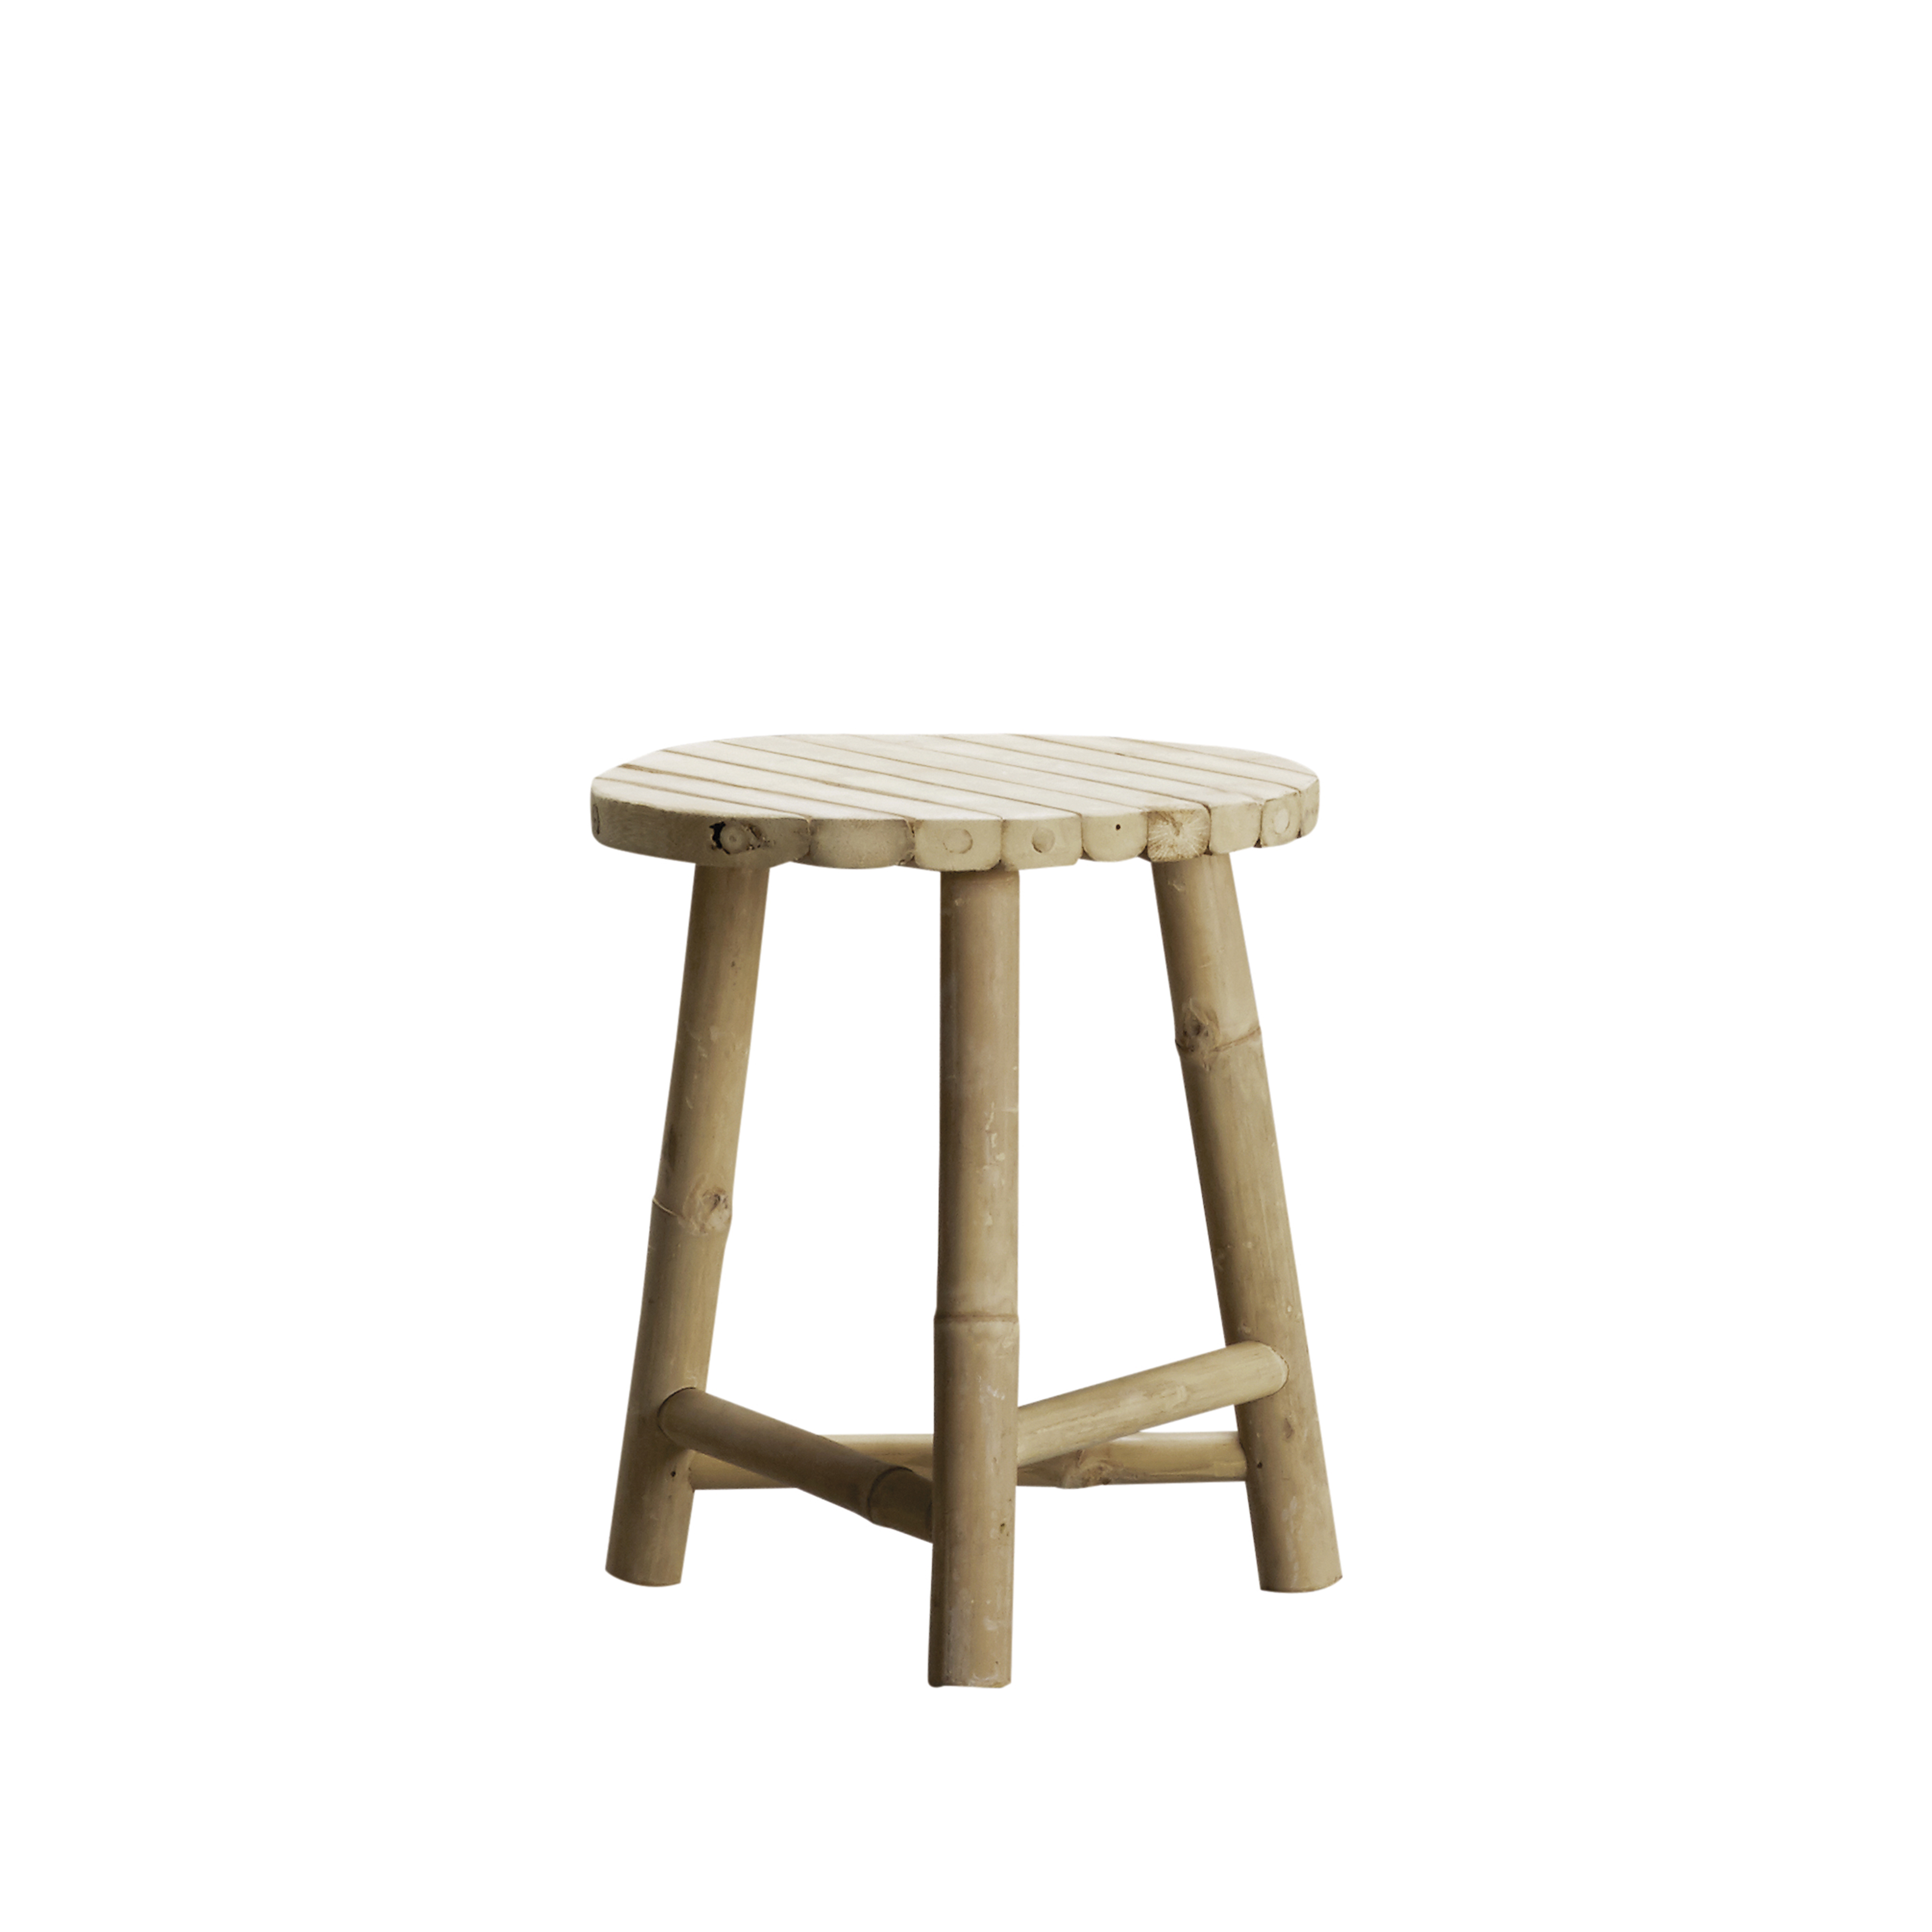 bamboo stool